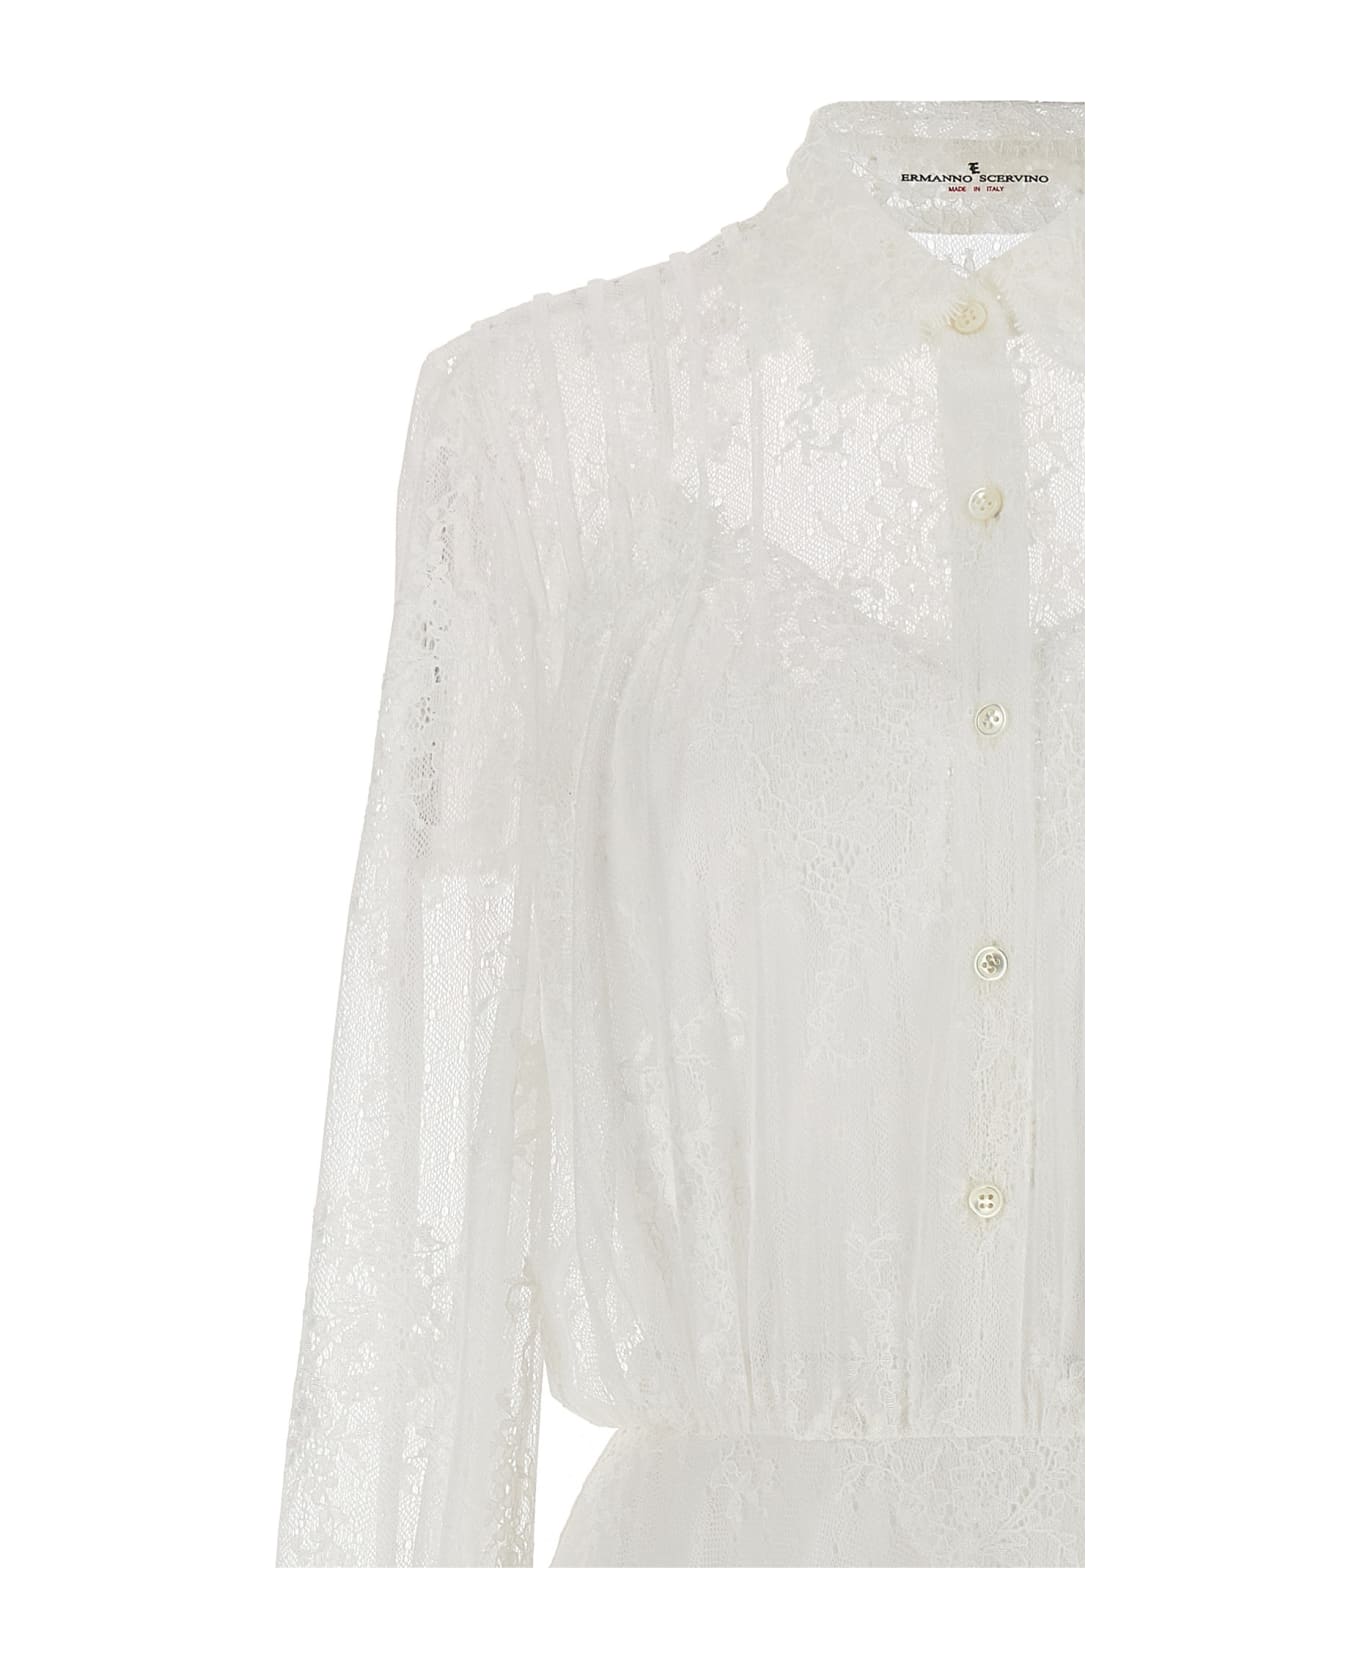 Ermanno Scervino Lace Long Dress - WHITE